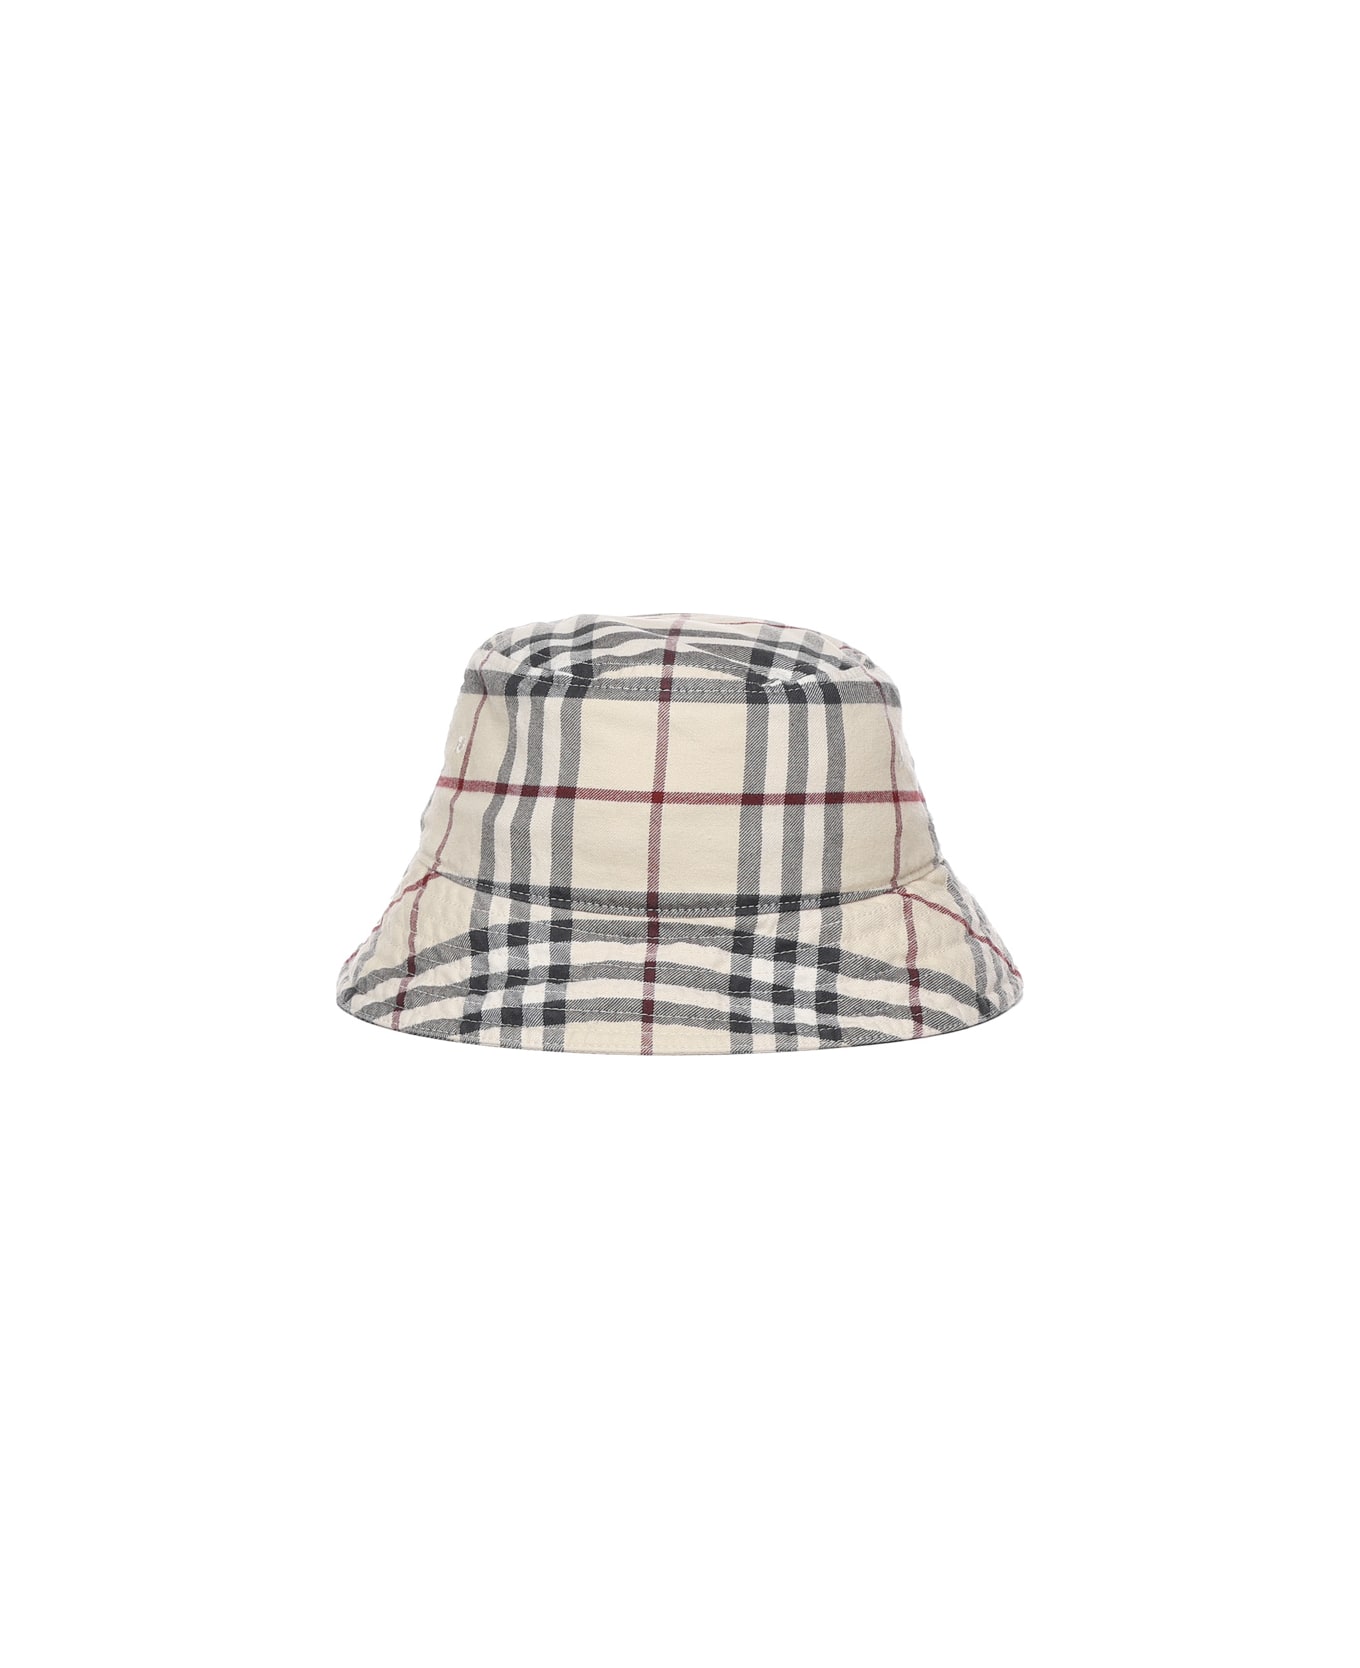 Burberry Vintage Check Bucket Hat - Vintage check 帽子